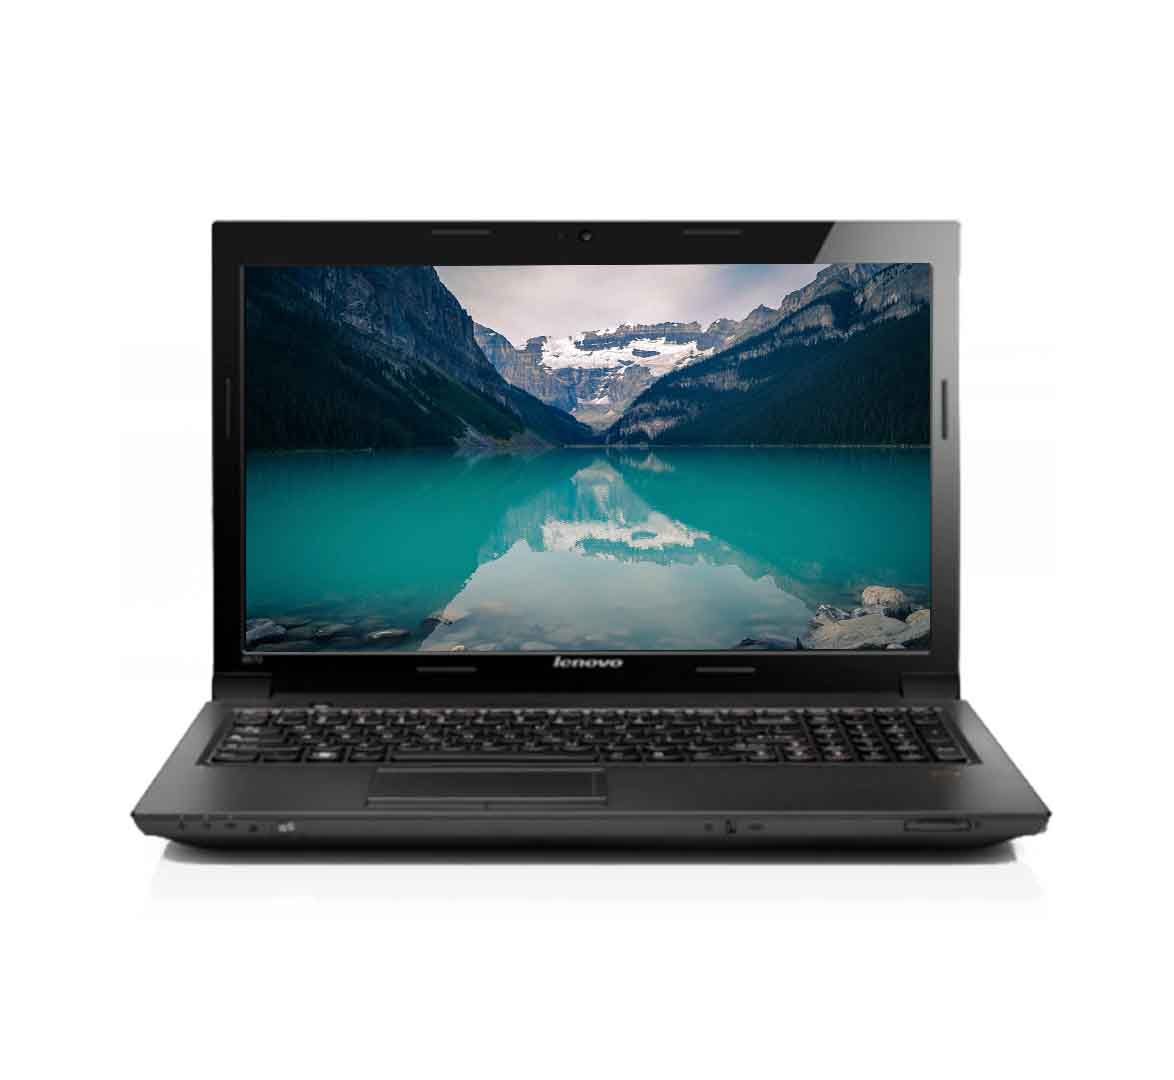 Lenovo B570 Business Laptop, Intel Core i3-2nd Gen CPU, 4GB RAM, 500GB HDD, 15.6 inch Display, Win 10 Pro, Refurbished Laptop